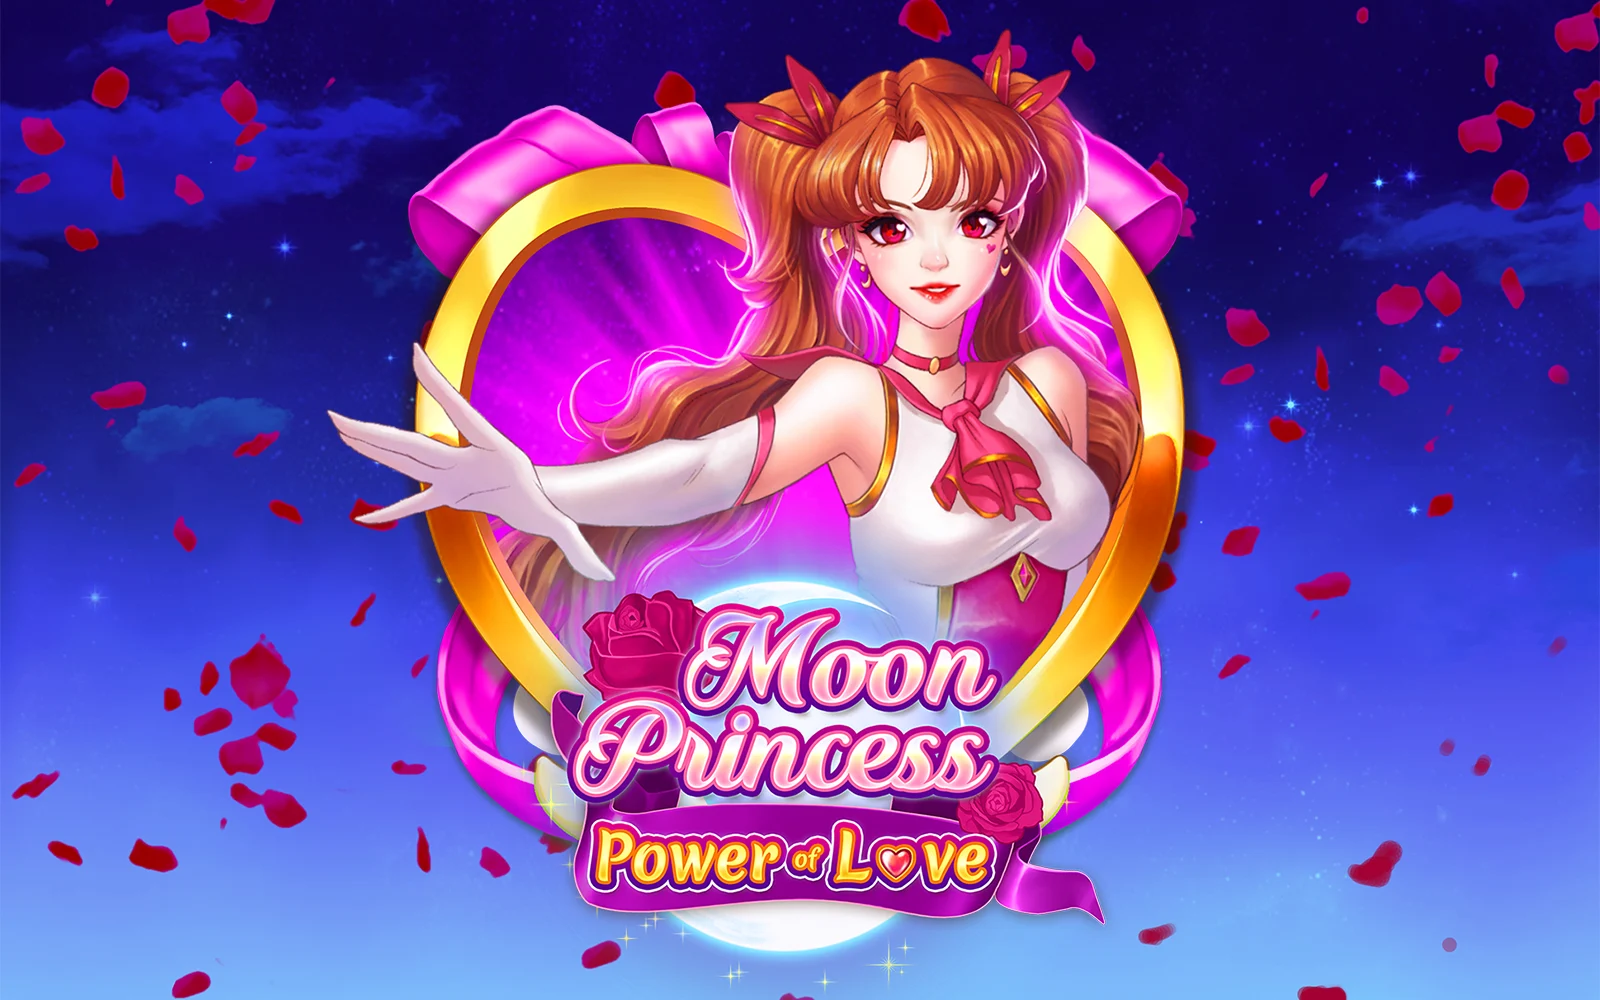 Play Moon Princess Power of Love on Starcasino.be online casino